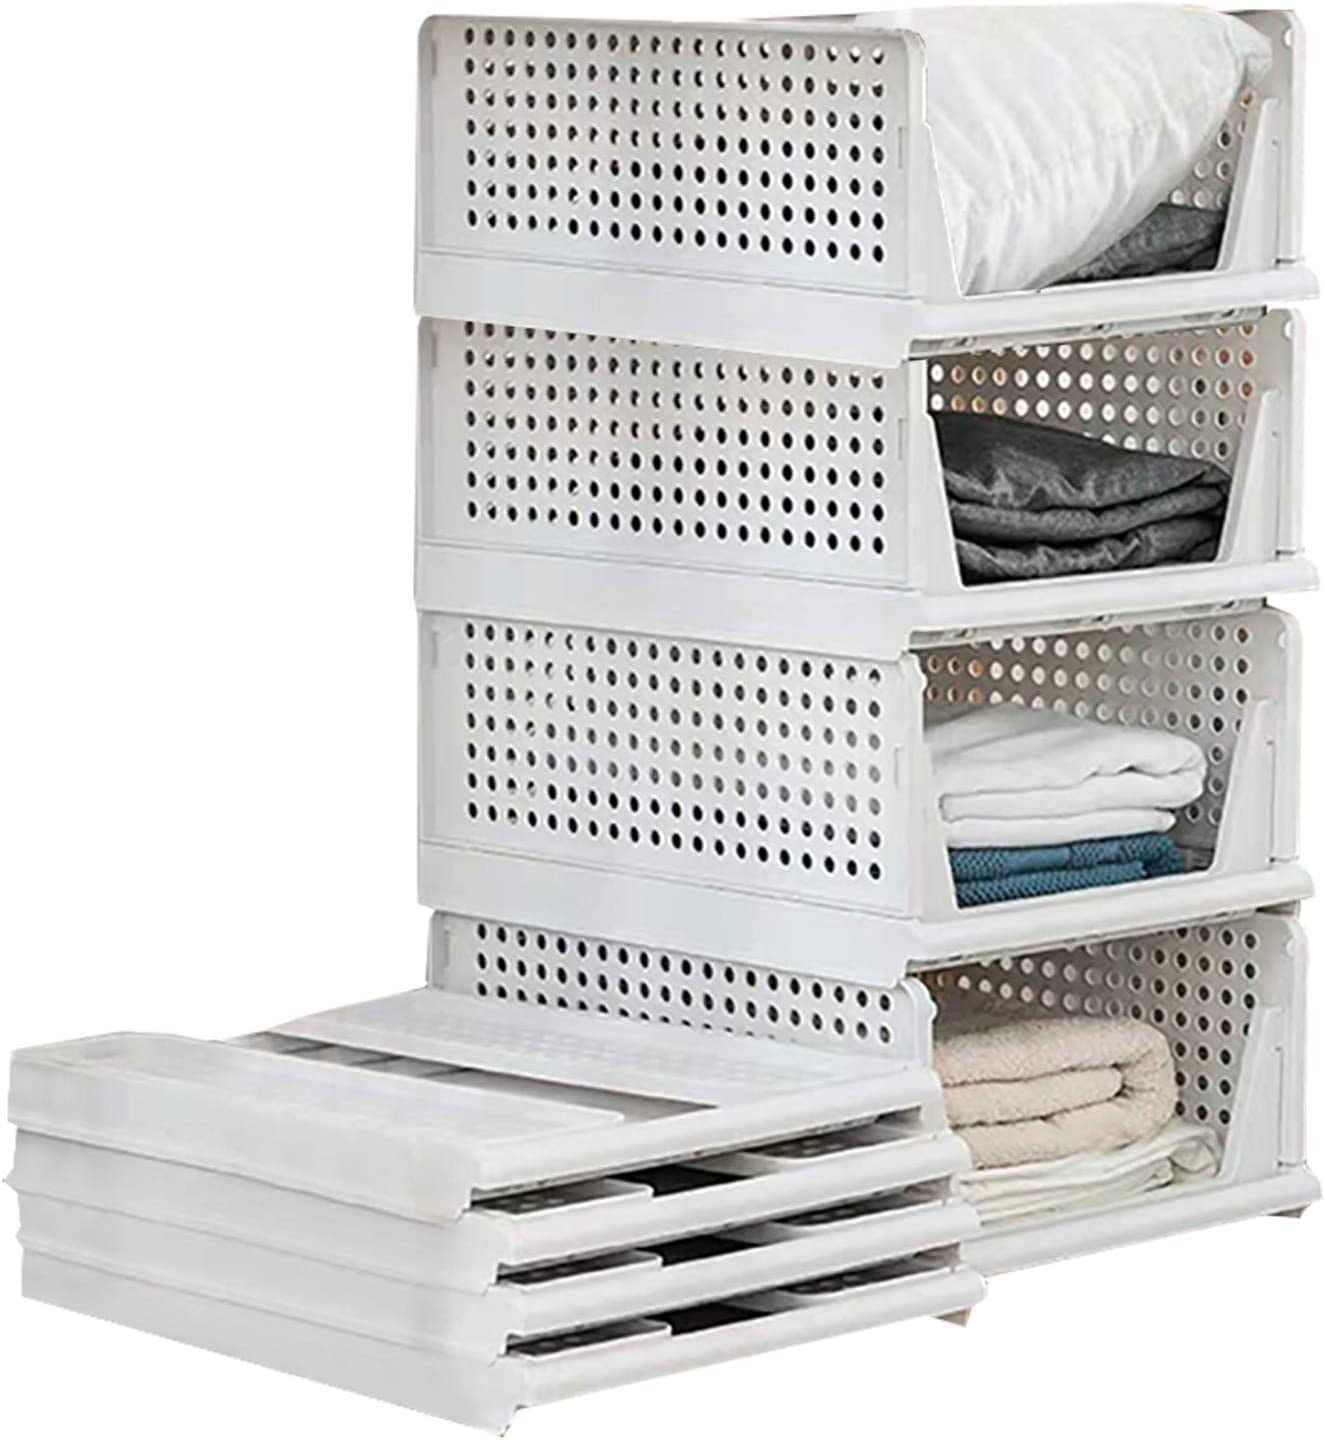  PRANDOM Closet Plastic Storage Baskets with Drawers [4